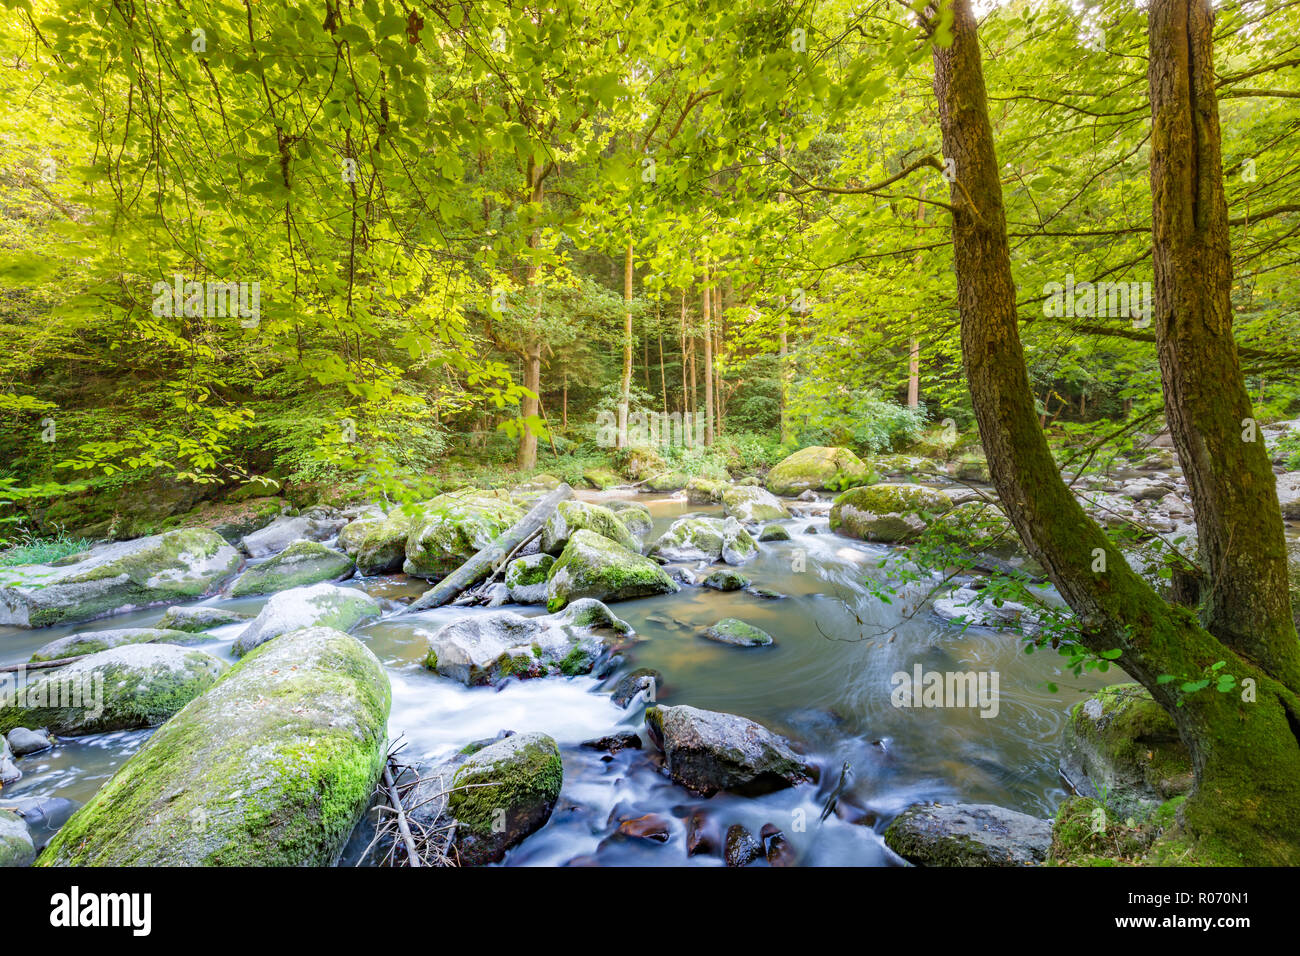 Hermoso río en bosque natural. Tonos pacífica naturaleza de fondo. Calma montaña y paisaje en el río Foto de stock